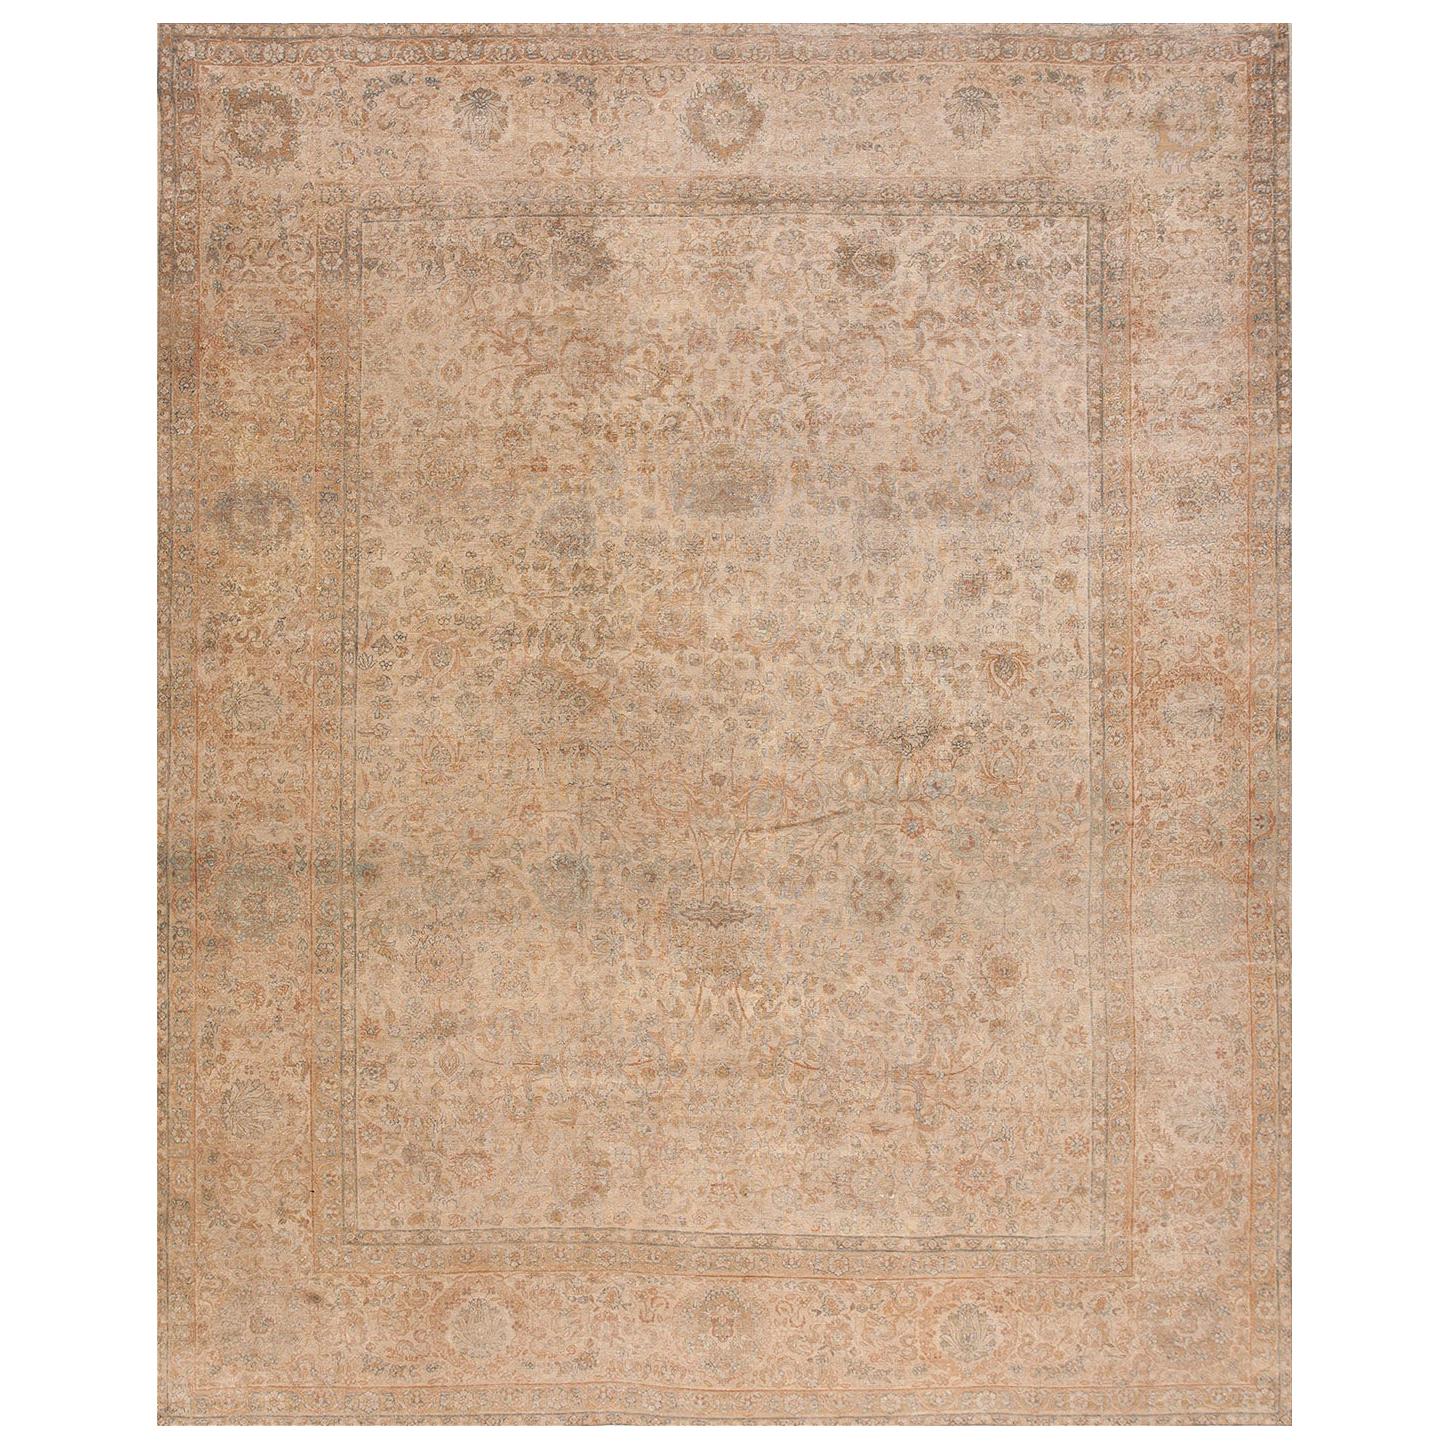 1930s Persian Kerman Carpet ( 9'3" x 11'9" - 282 x 358 cm )